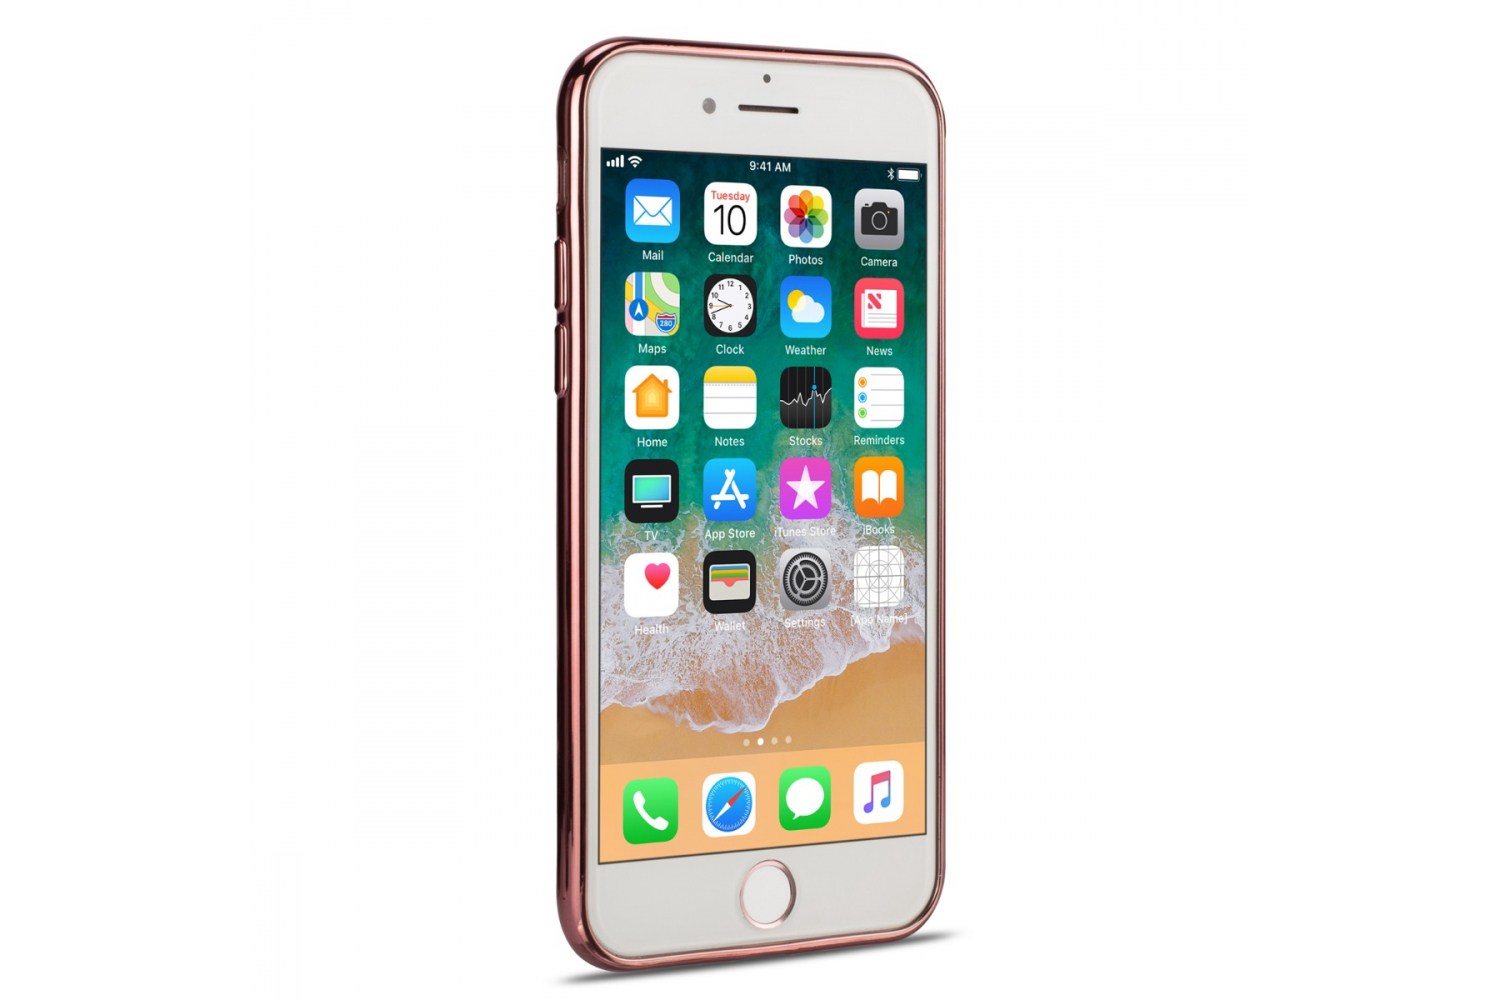 Iphone 7 Back cover TPU case Transparant Rose goud